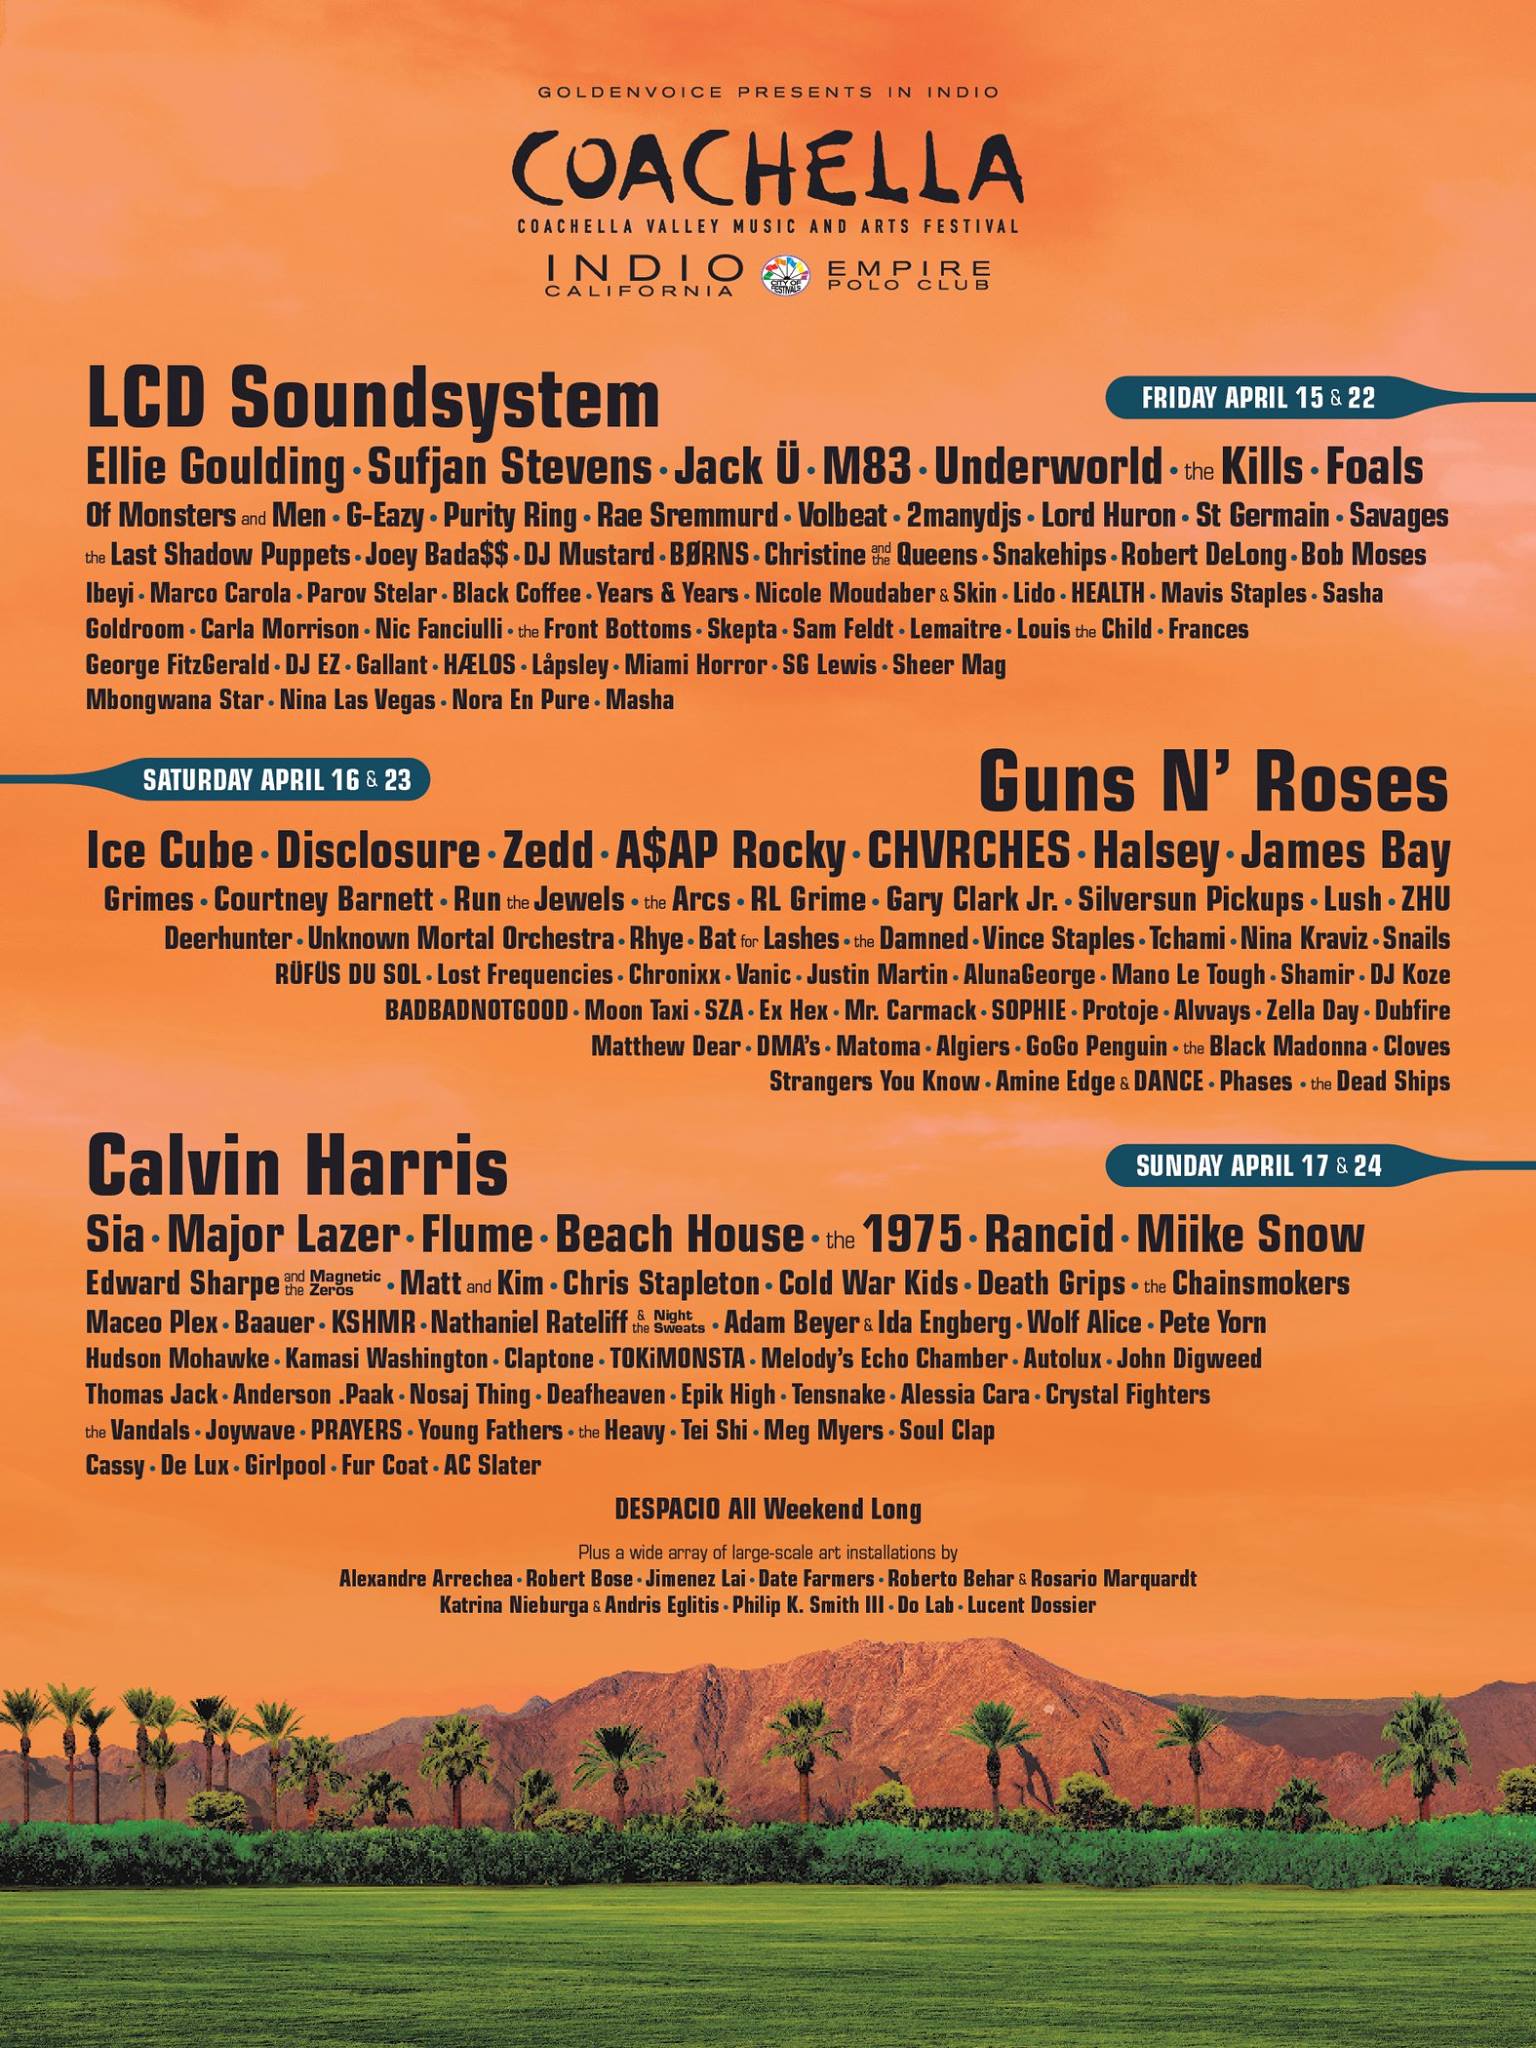 Coachella 2016 line up